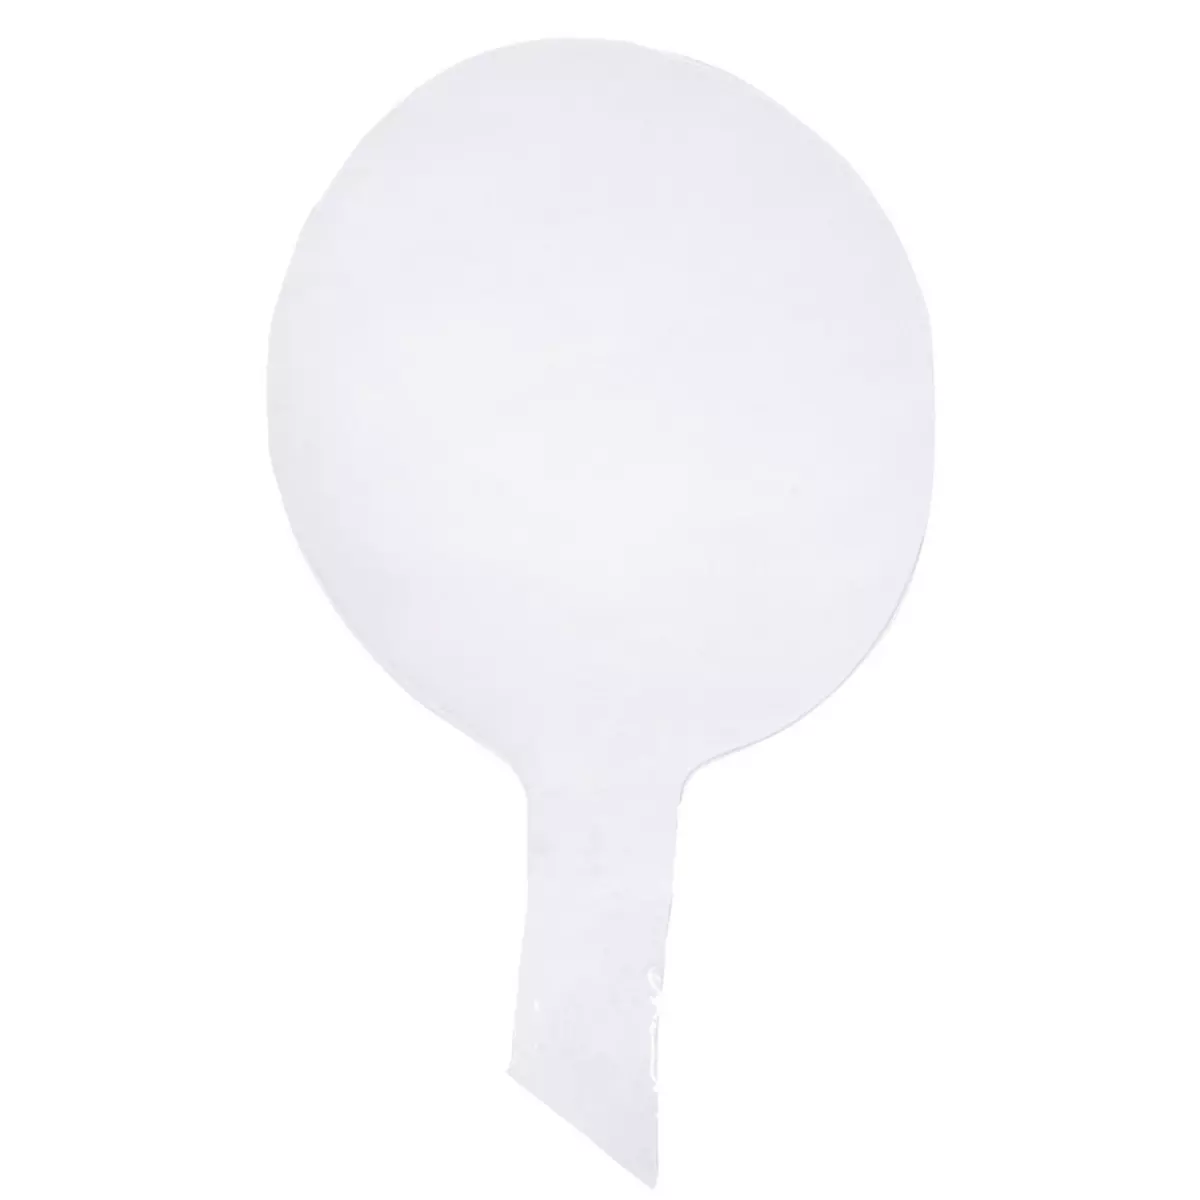 Rayher Bubble Ballon, 24 ± 2cm ø, transparent, 3 pces